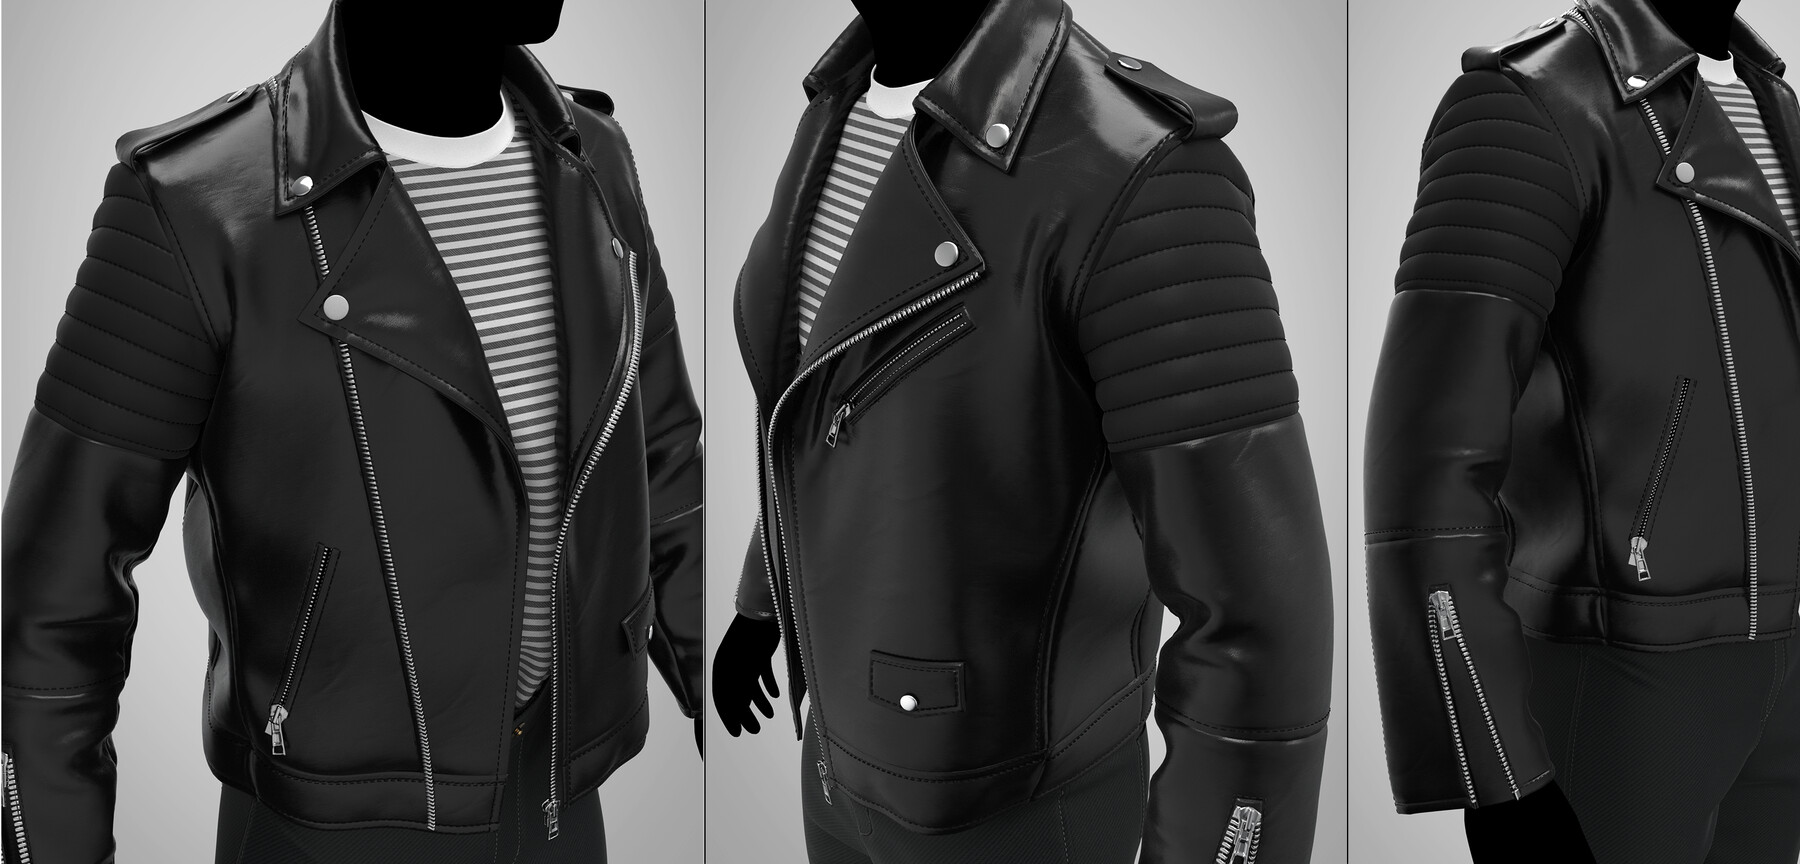 ArtStation - Men's Leather Jacket Outfit